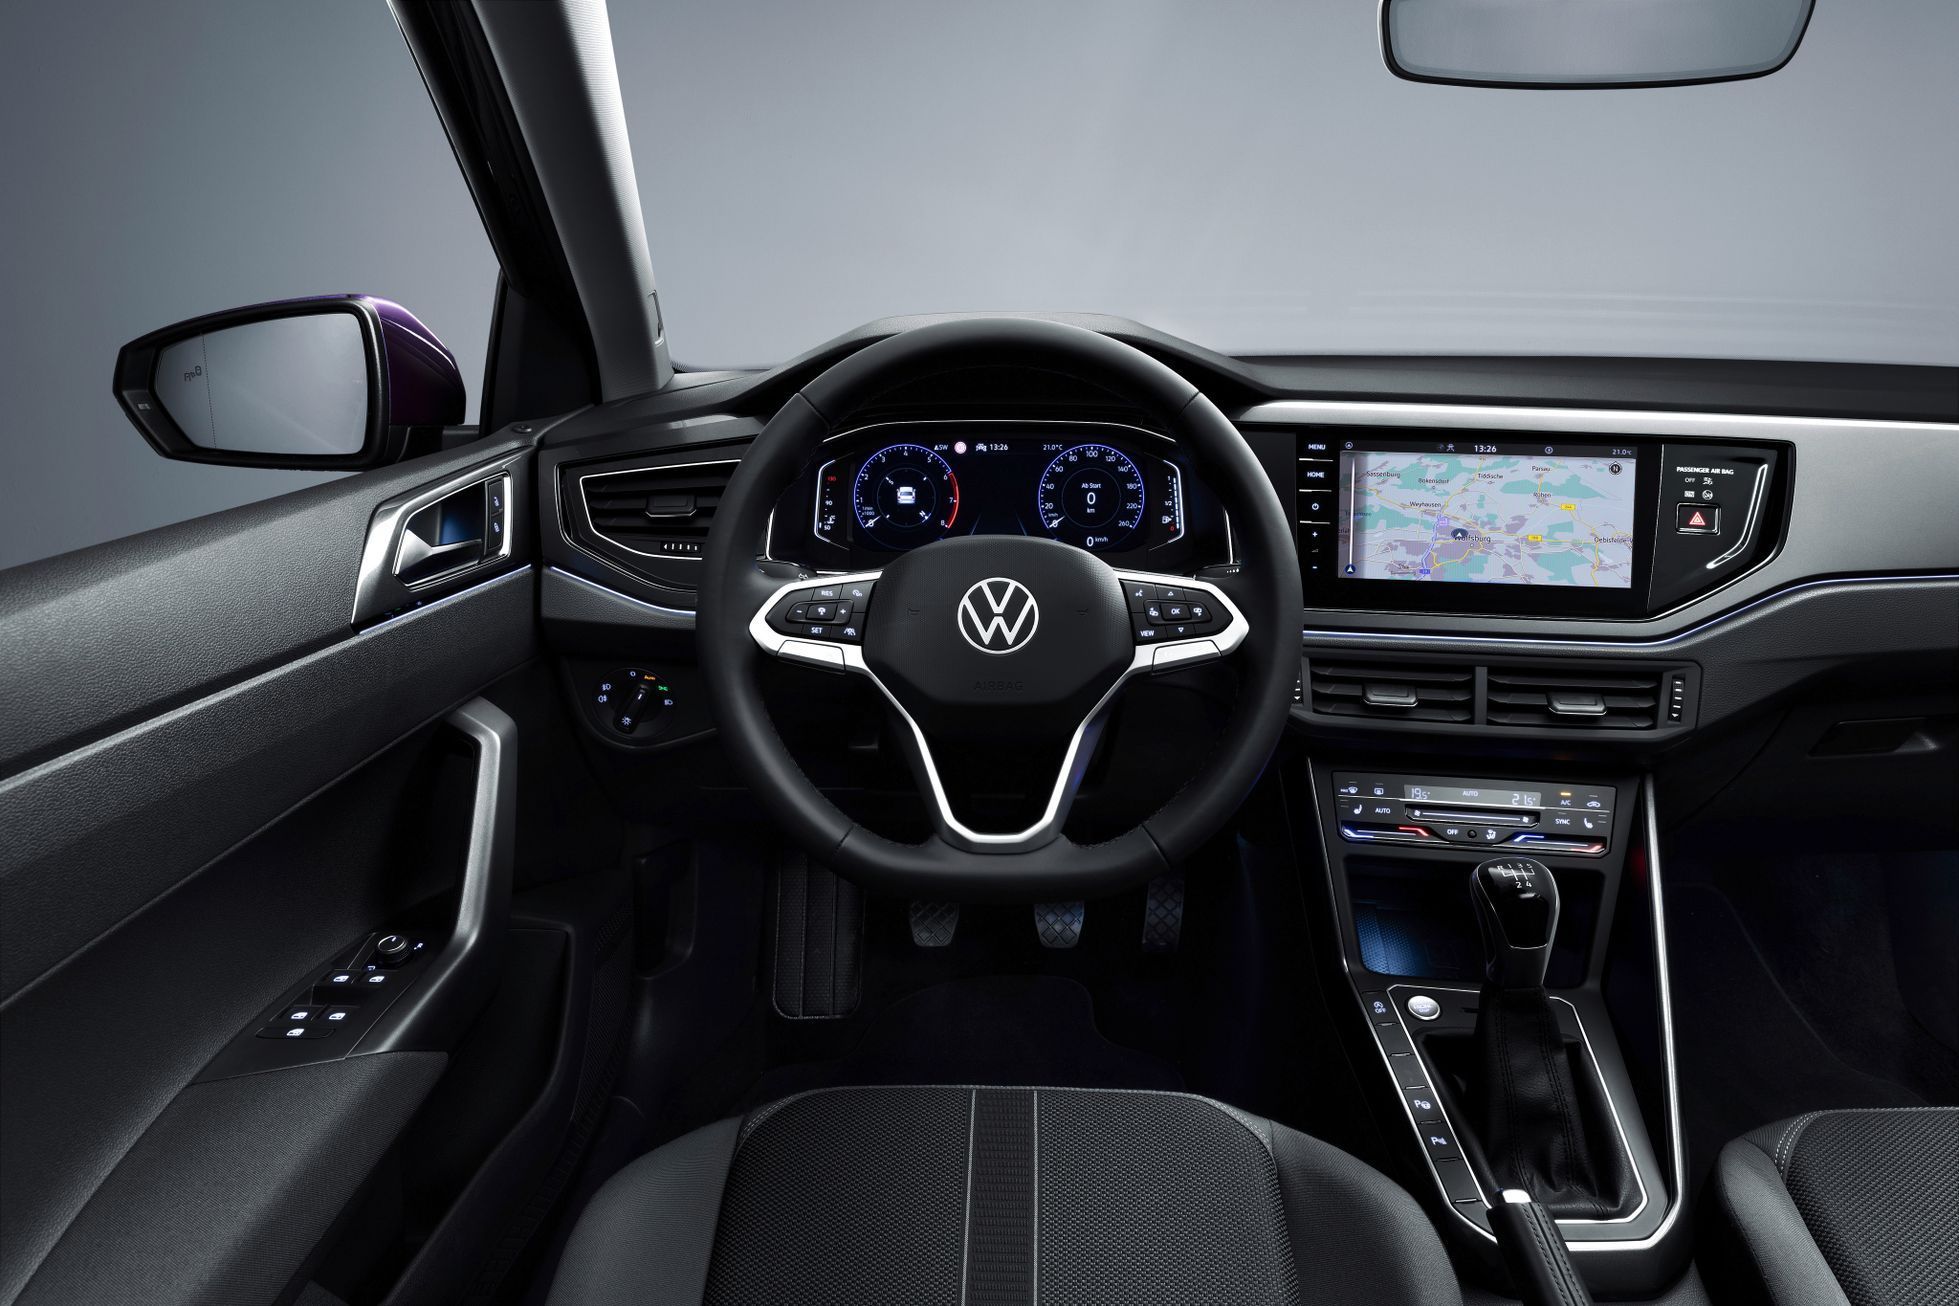 Volkswagen Polo facelift